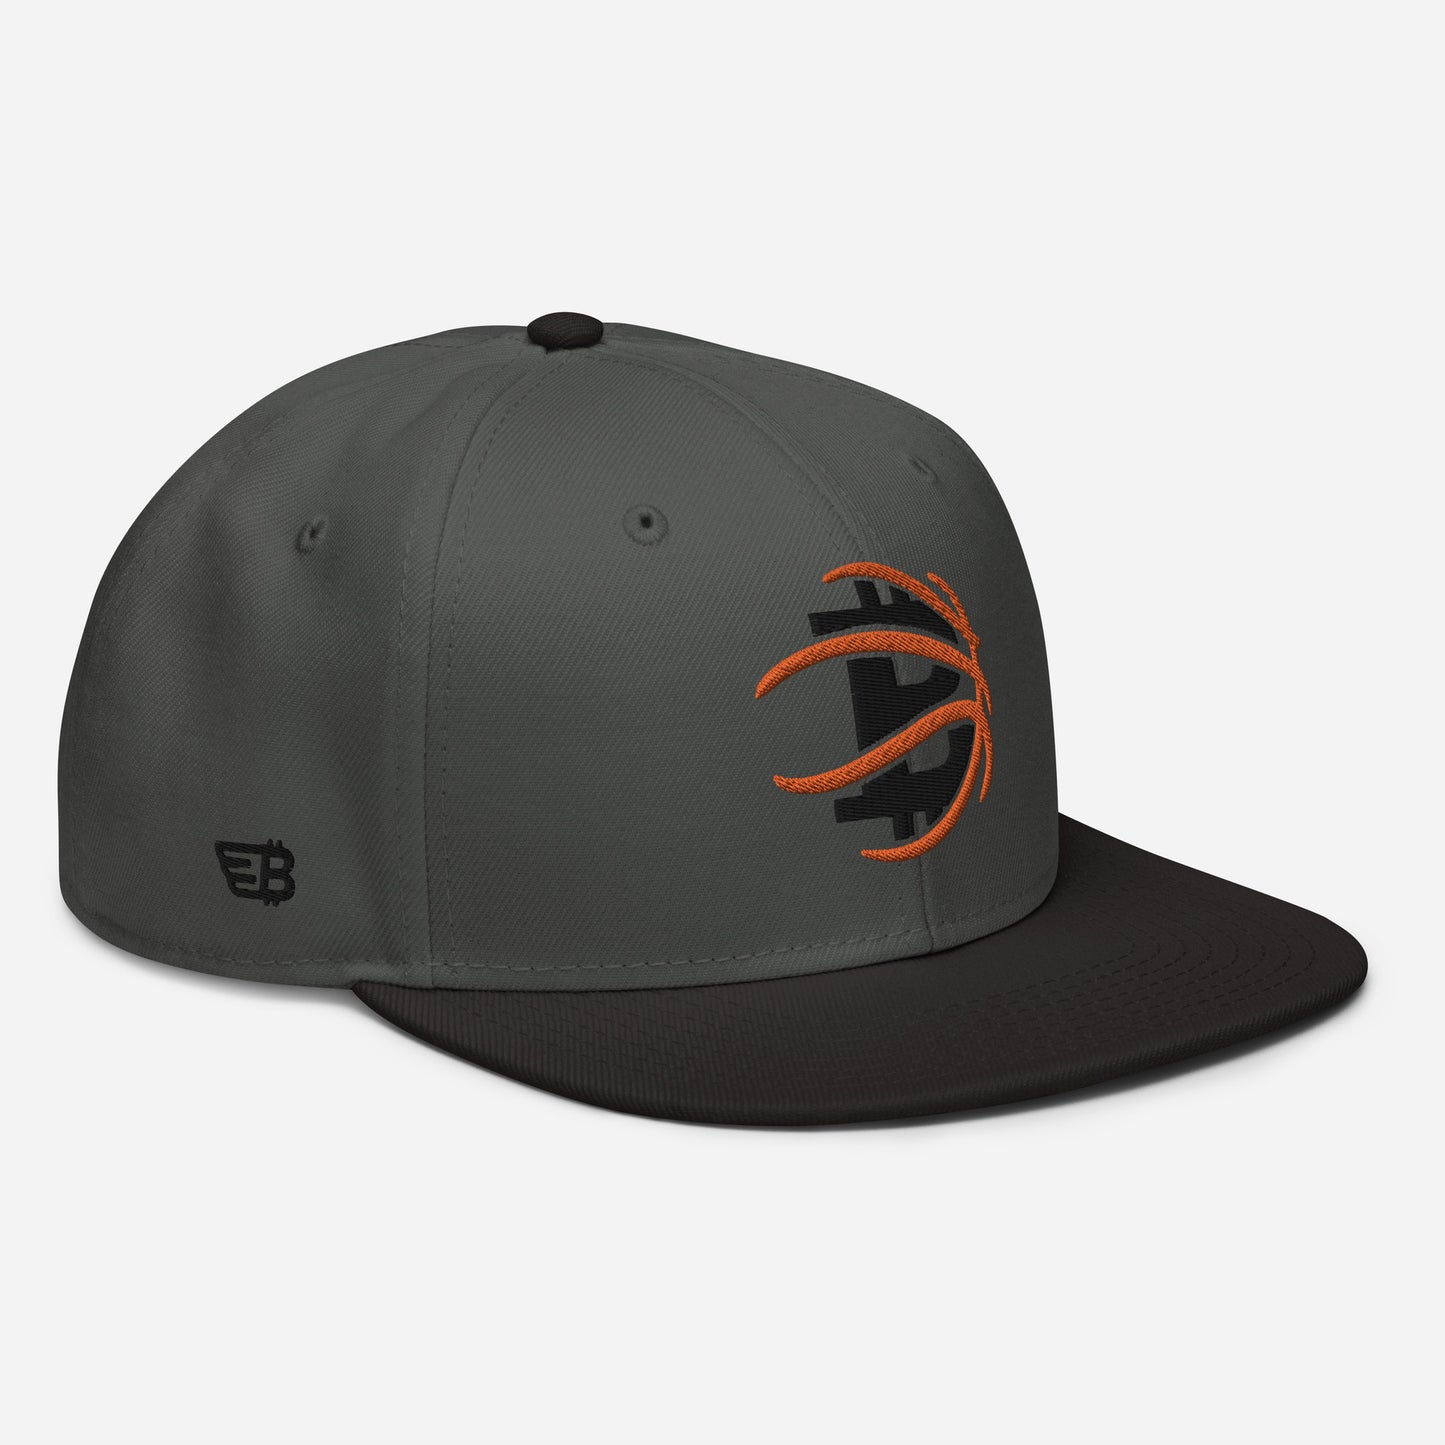 "₿asketball" Charcoal gray/Black Snapback Hat